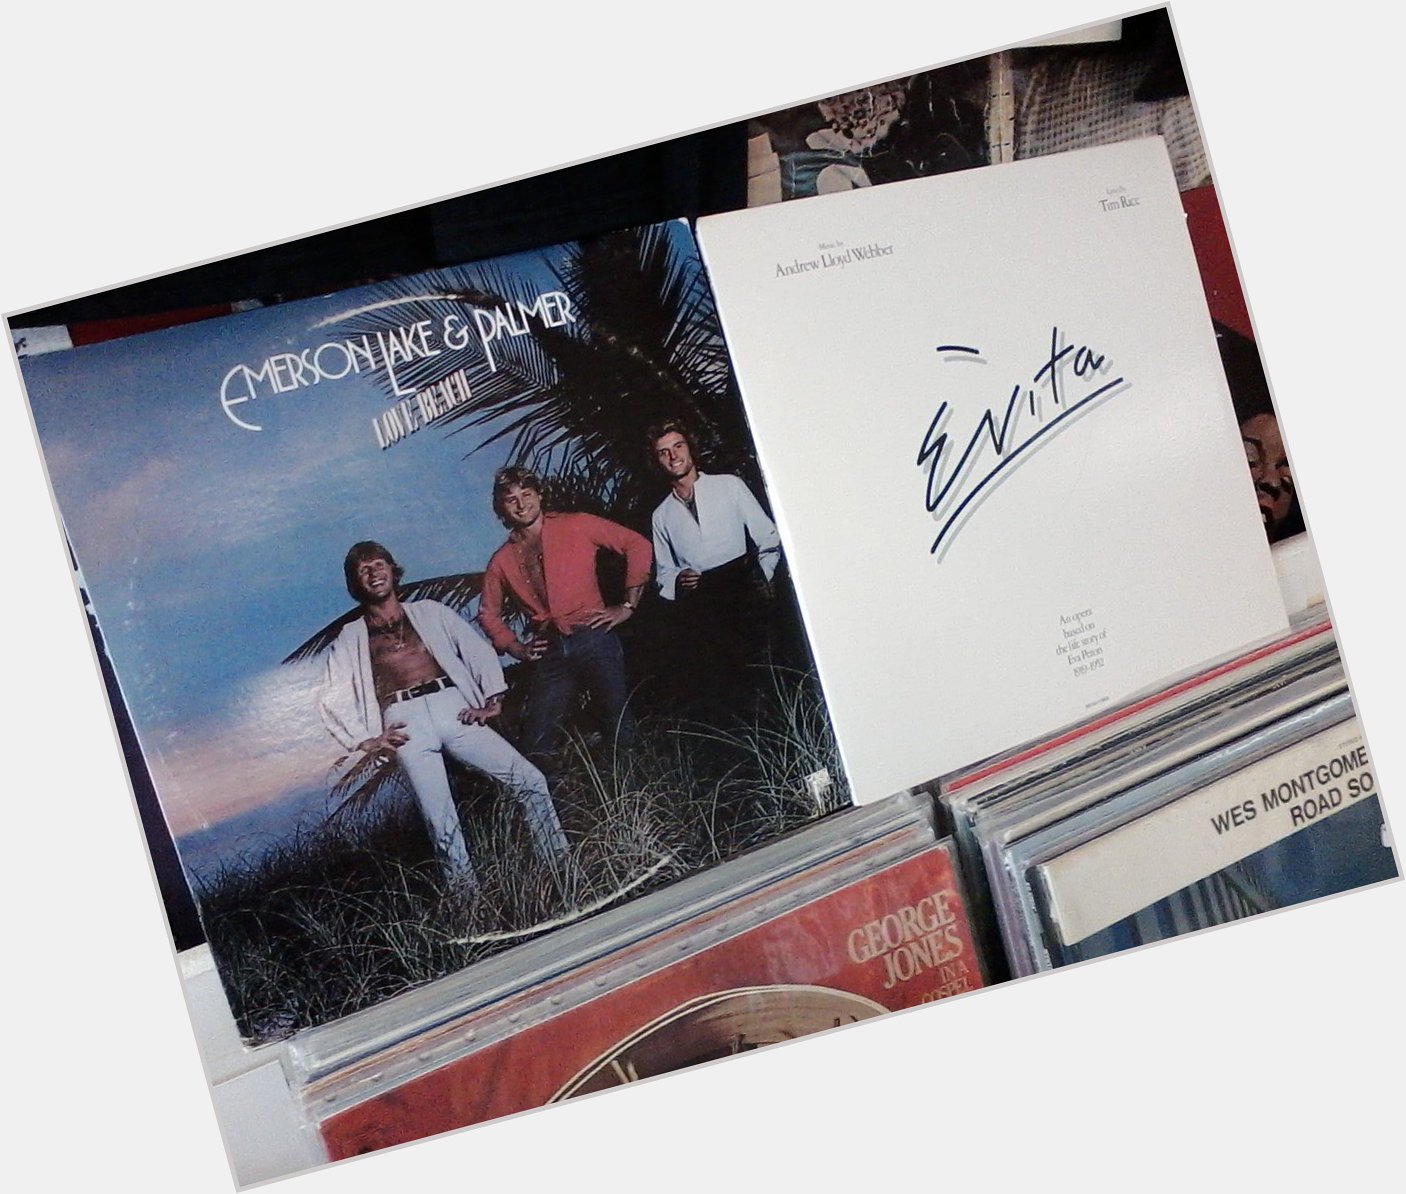 Happy Birthday to the late Greg Lake of Emerson, Lake & Palmer & Tim Rice, lyricist for Evita 